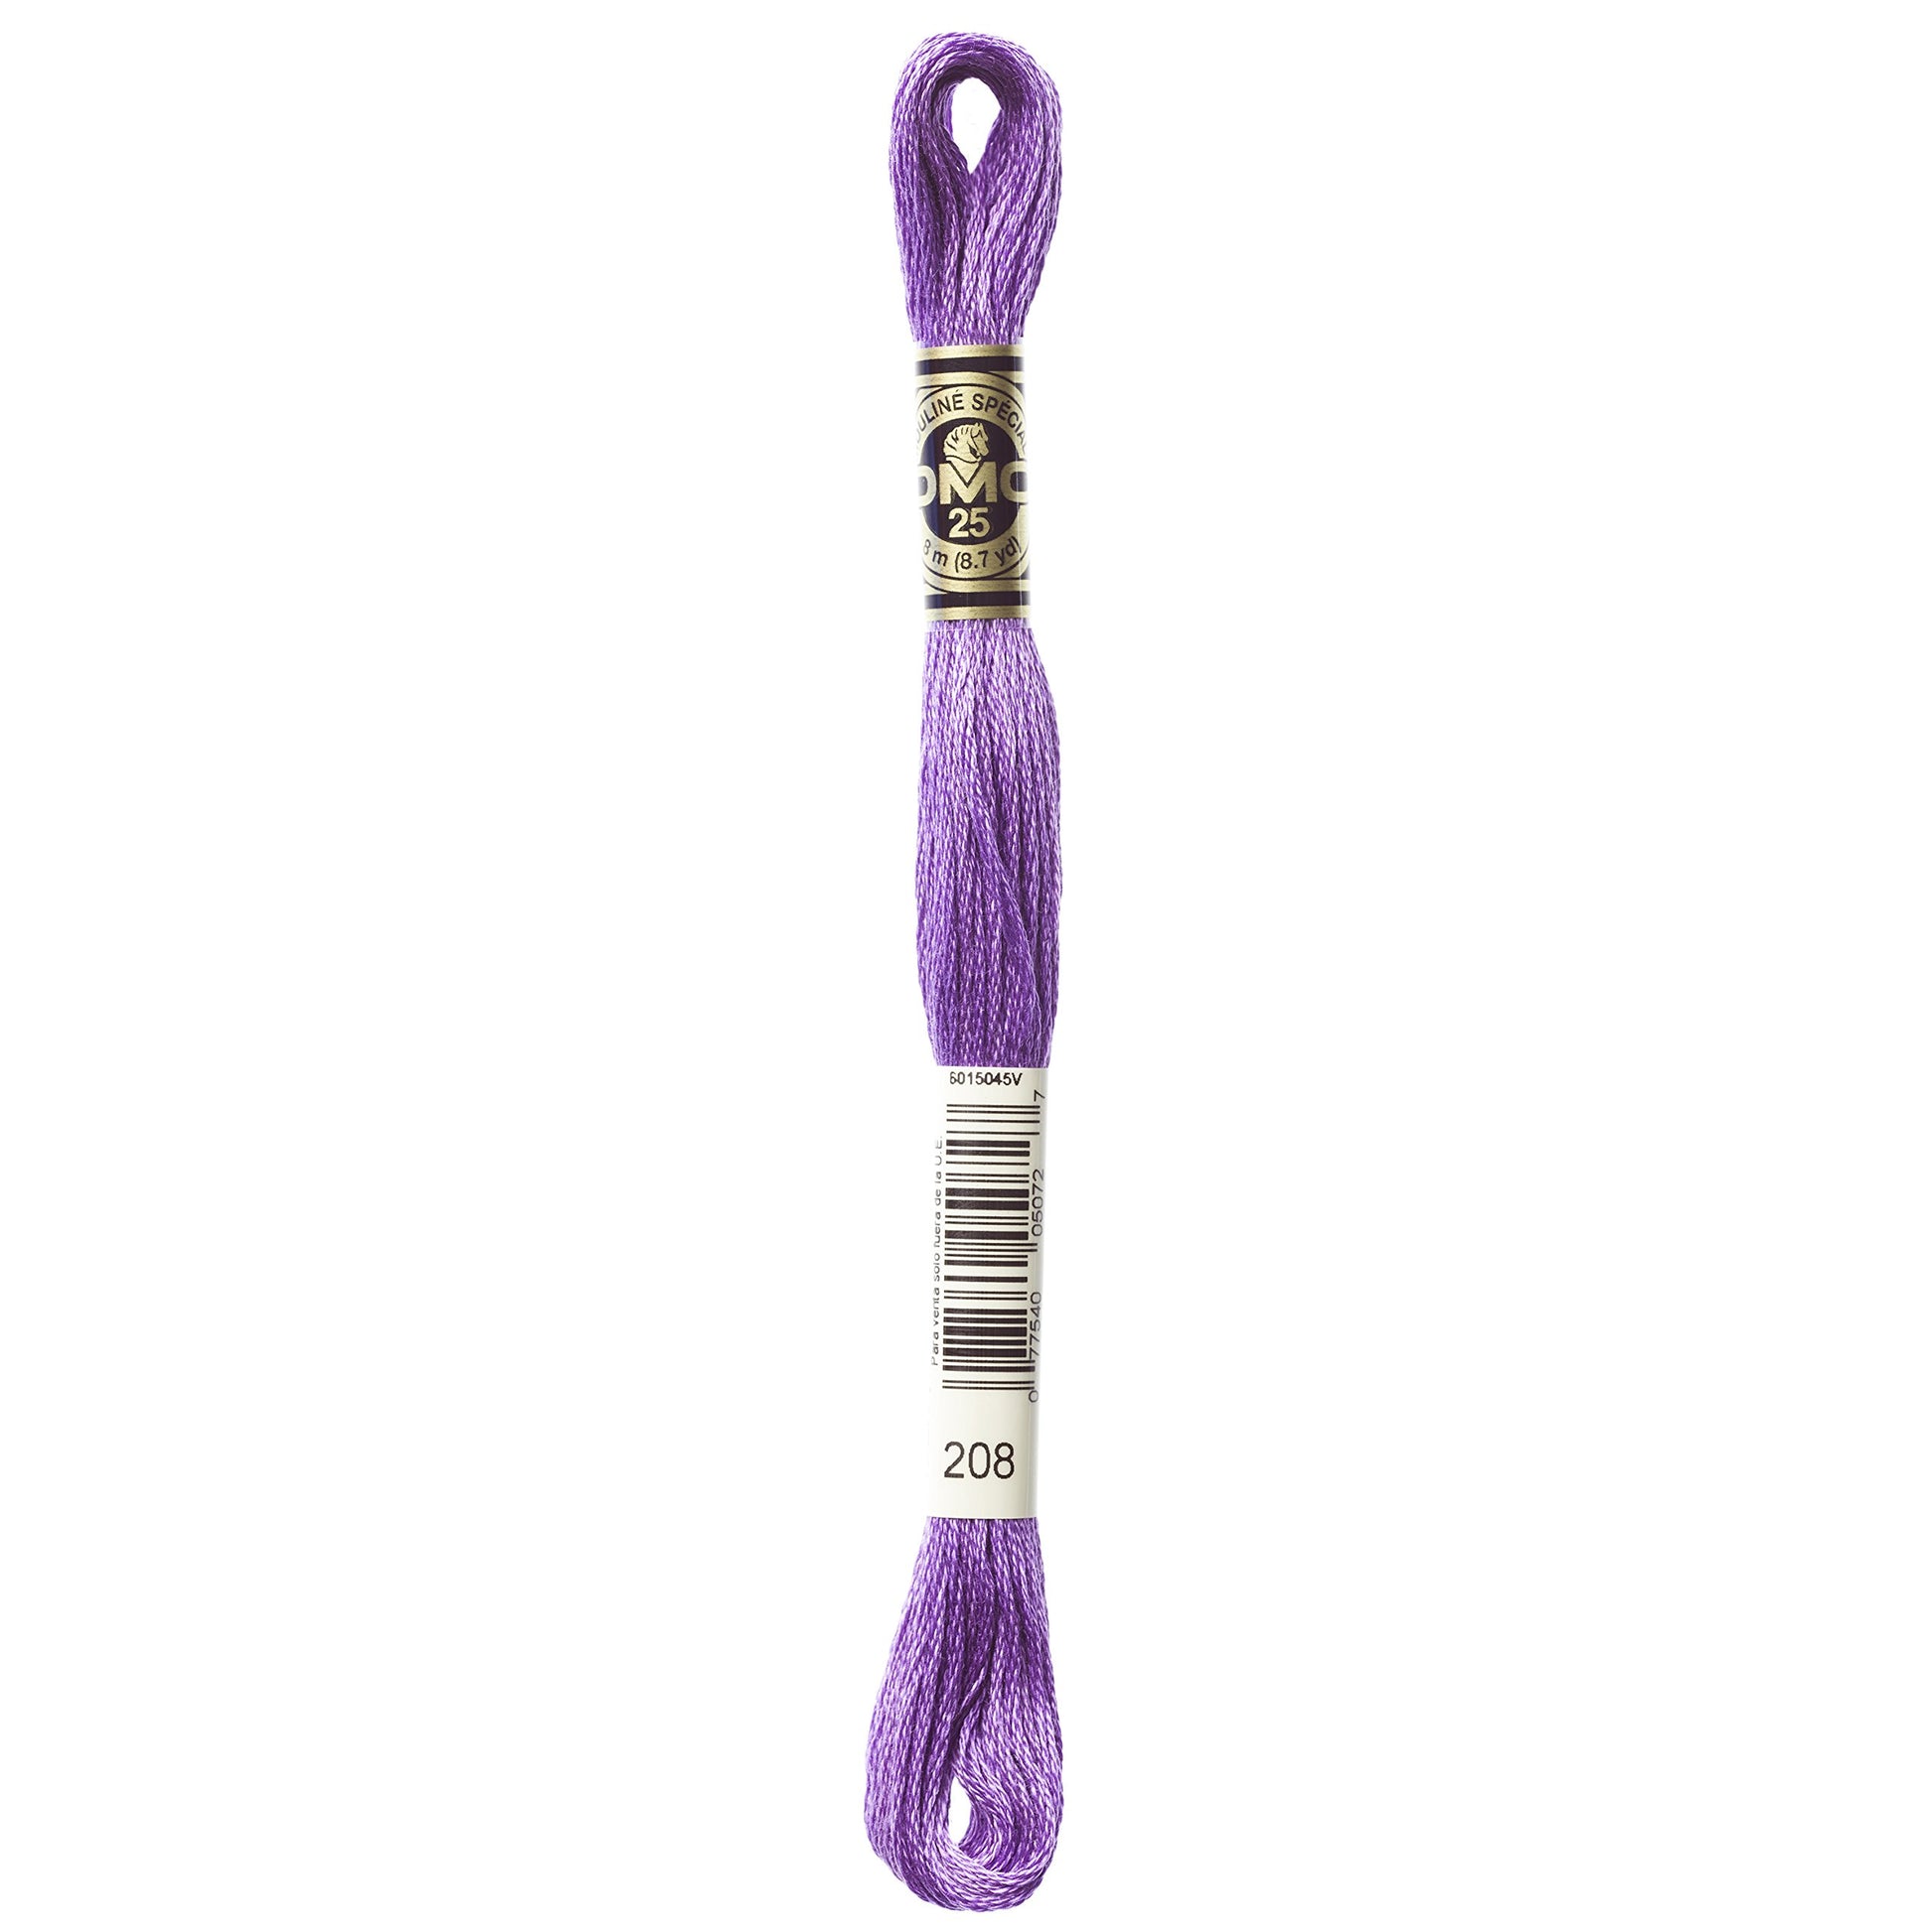 DMC 208 - Lavender - Very Dark - DMC 6 Strand Embroidery Thread, Thread & Floss, Thread & Floss, The Crafty Grimalkin - A Cross Stitch Store